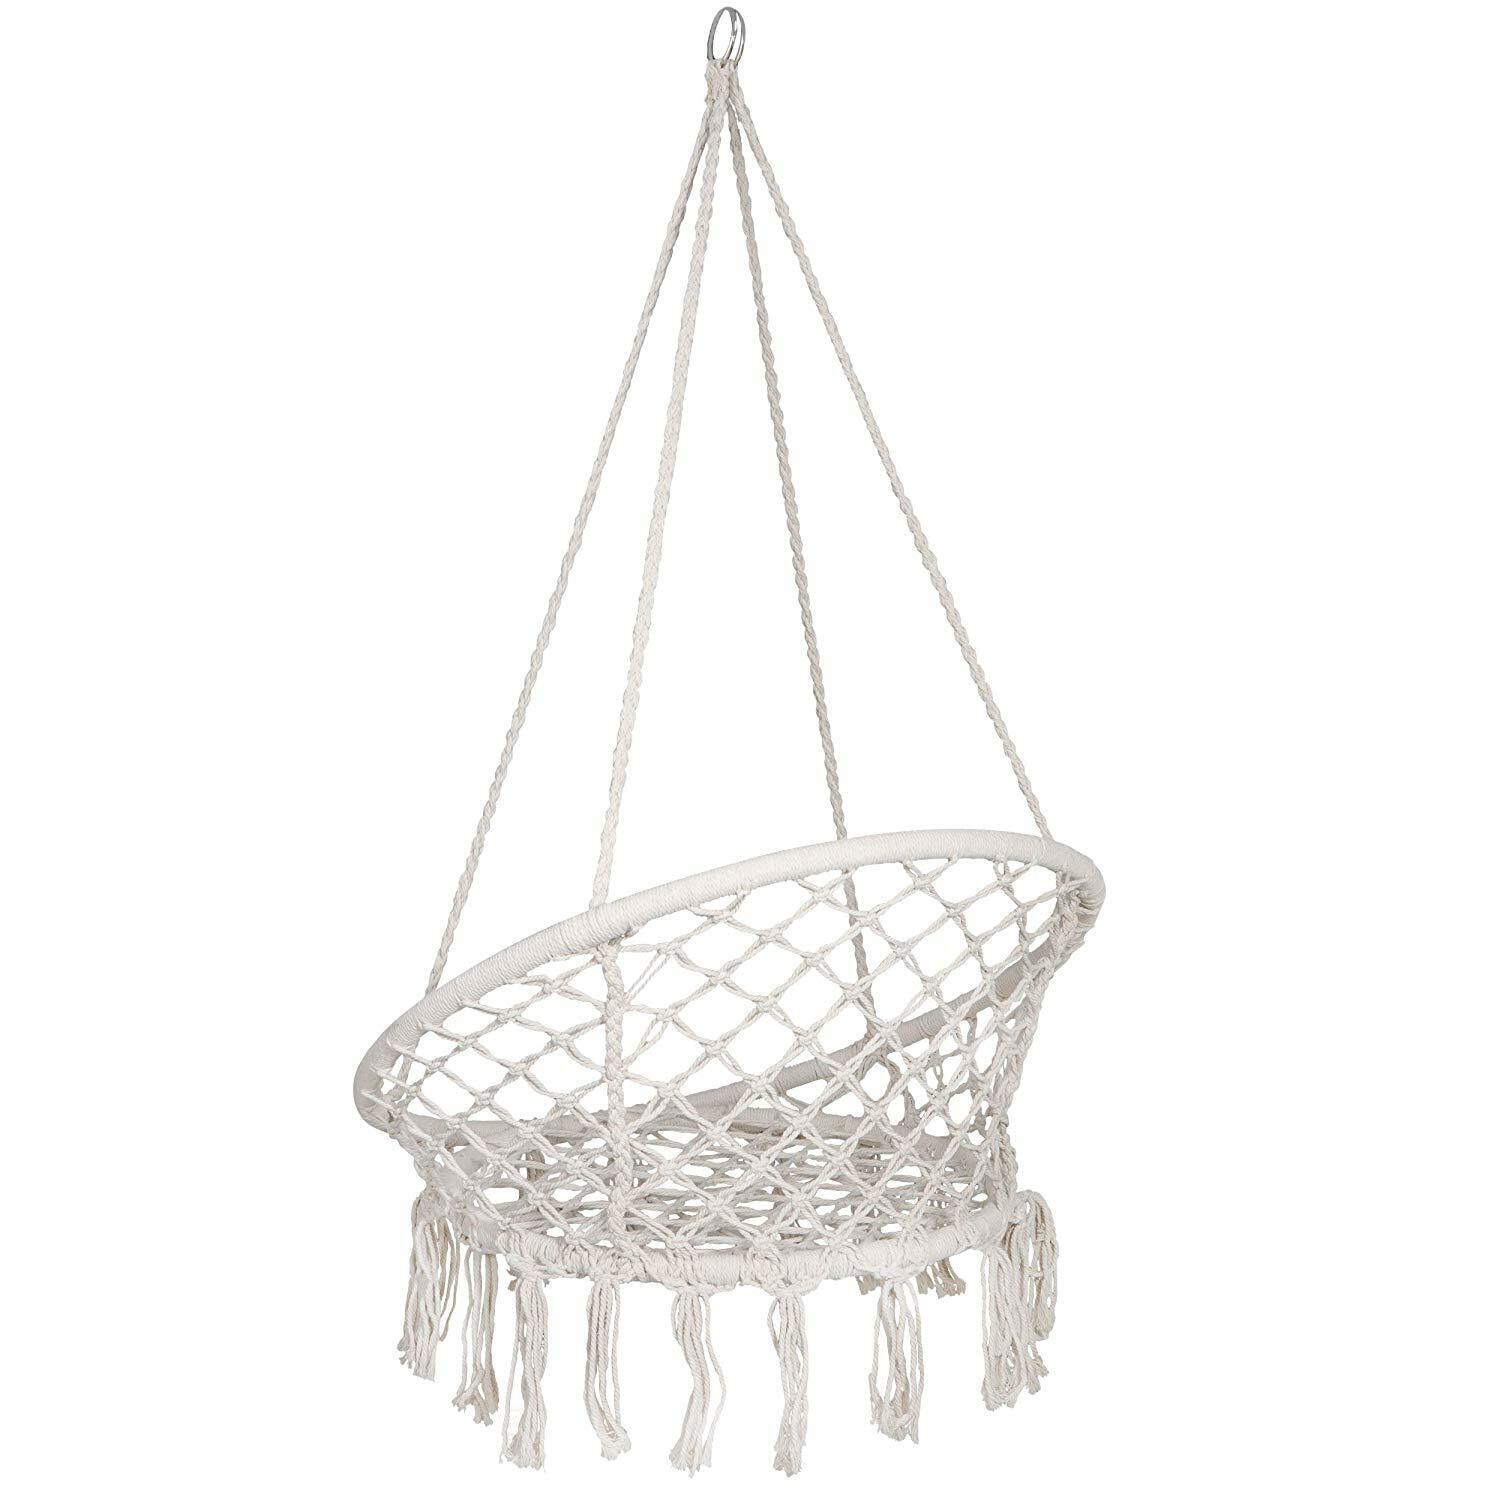 Beige Hammock Chair Macrame Swing Hanging Cotton Rope 330lb Capacity In/Outdoor